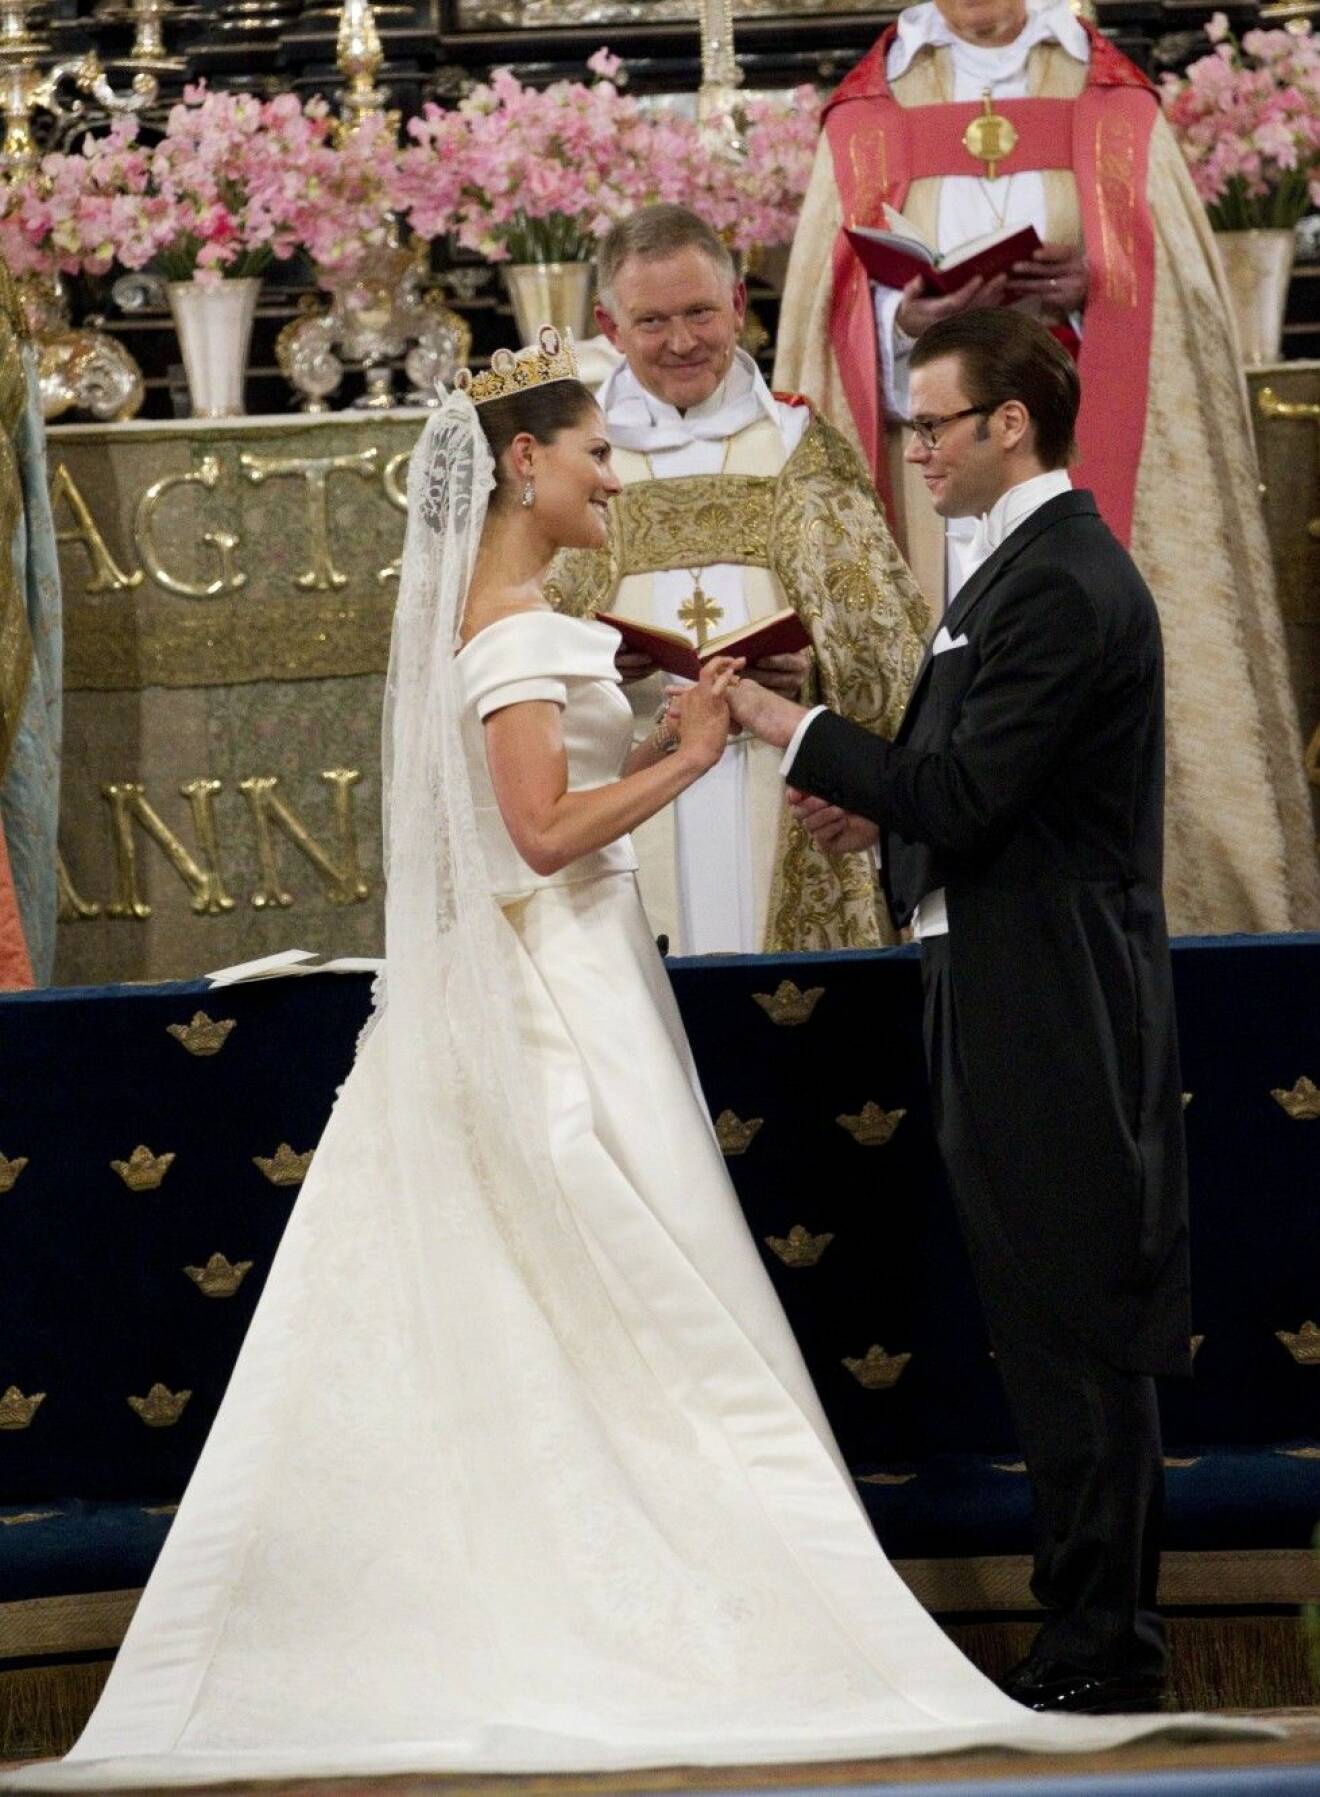 Royal wedding in Stockholm - Ceremony